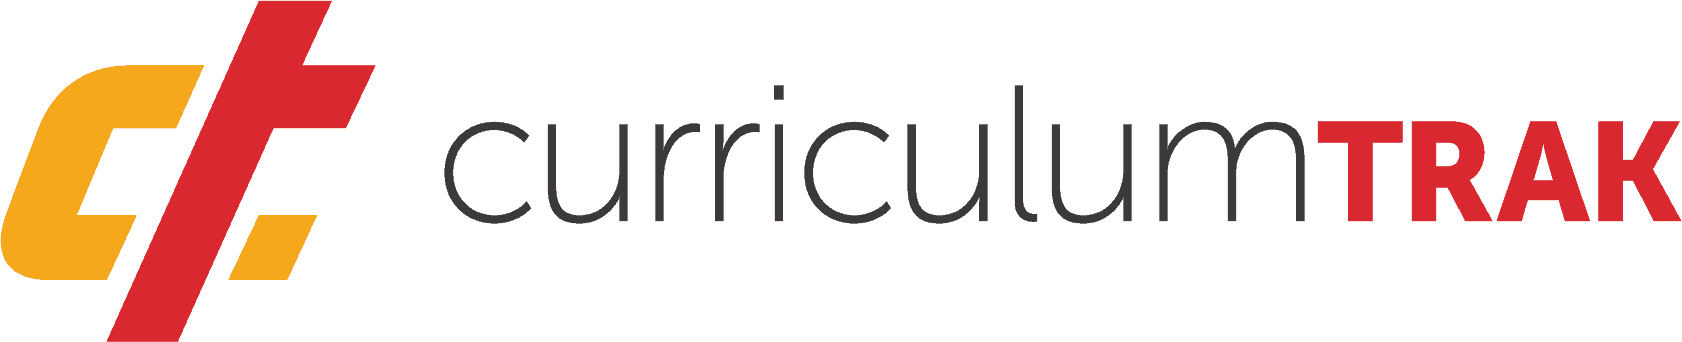 CurriculumTrak logo